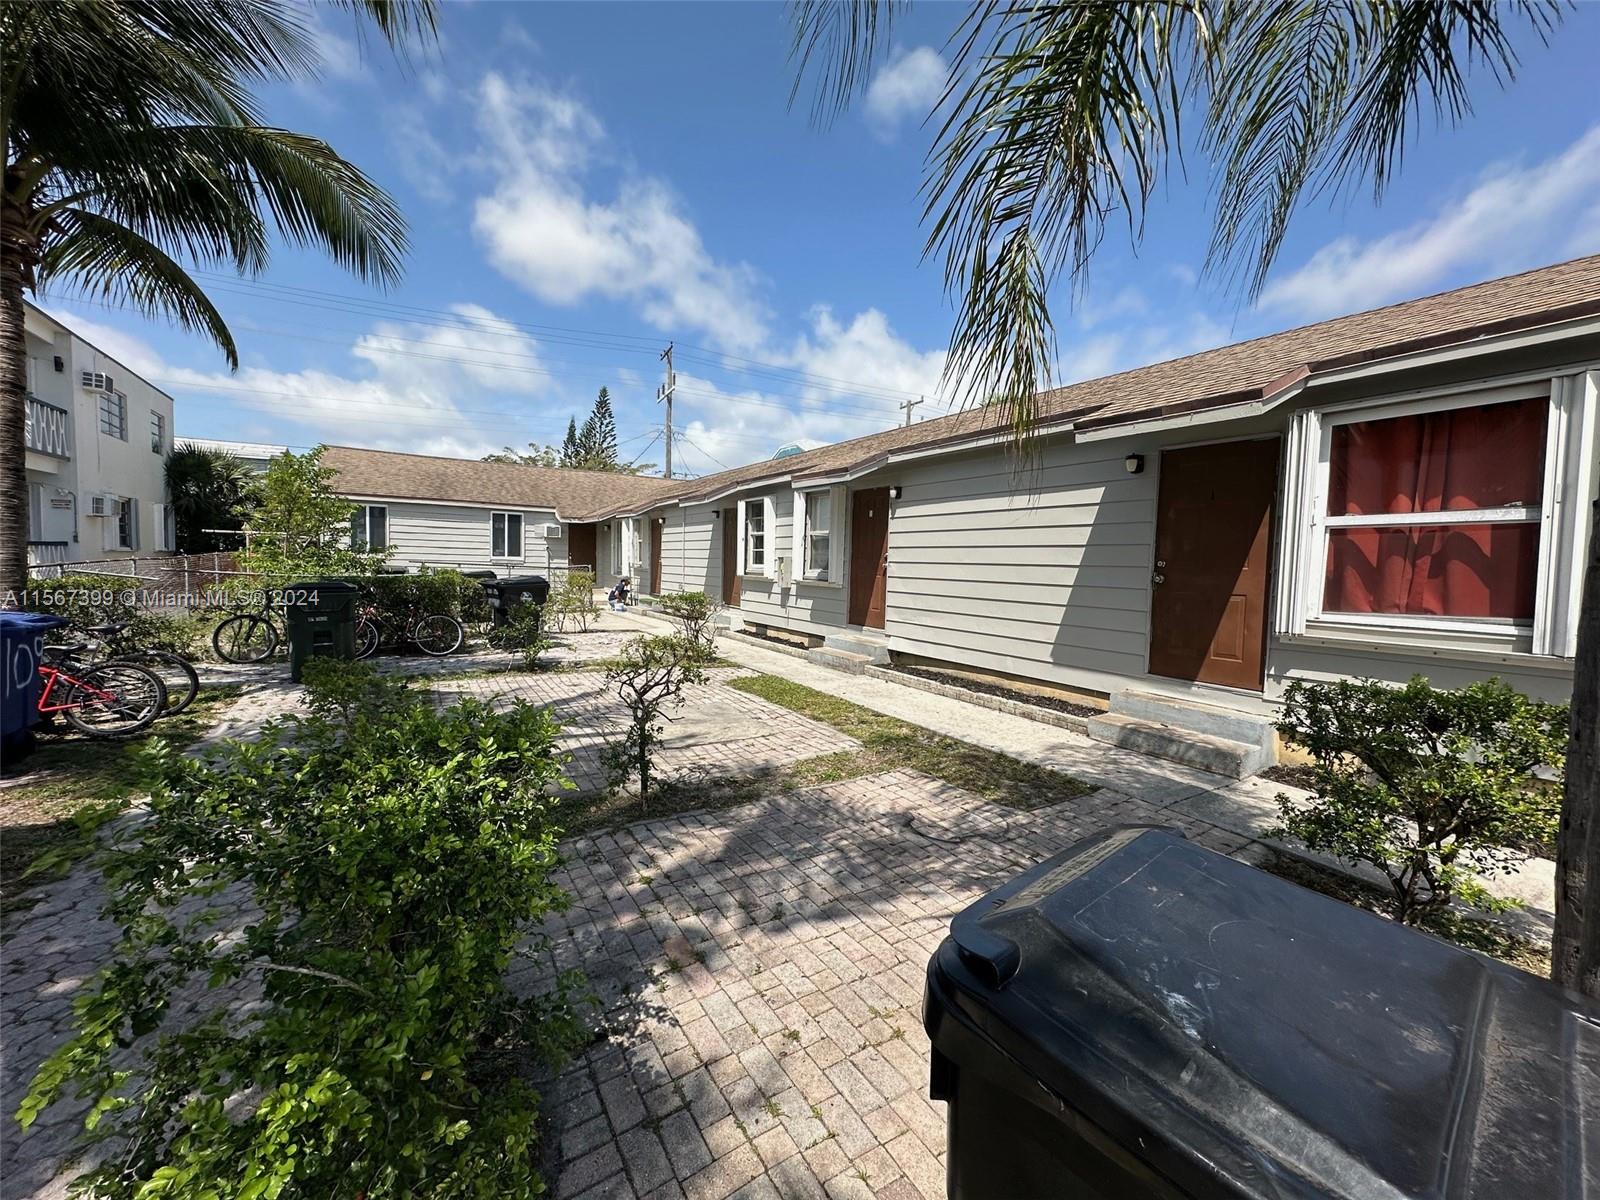 Rental Property at 109 S C Street St 3, Lake Worth, Palm Beach County, Florida - Bathrooms: 1  - $1,300 MO.